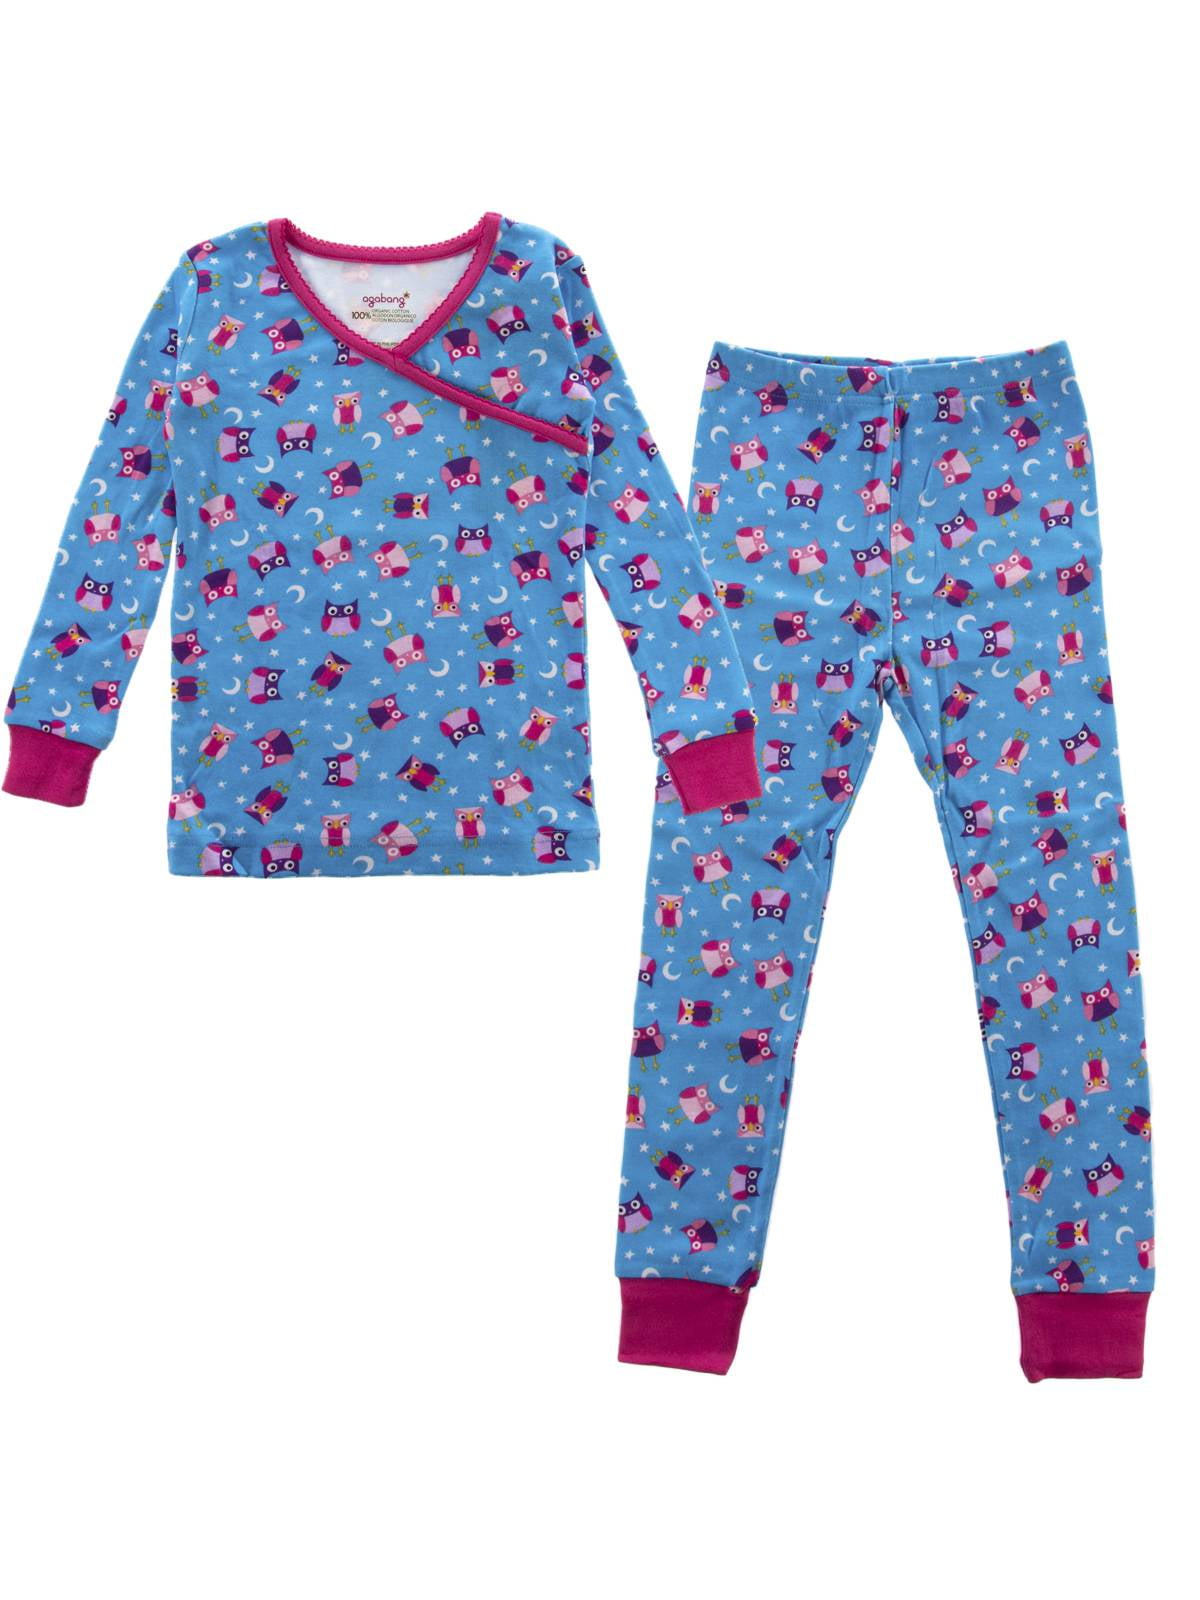 fleece pant New GIRL 3T 2x  2-pieces pajama set PJ's sleepwear cotton top 